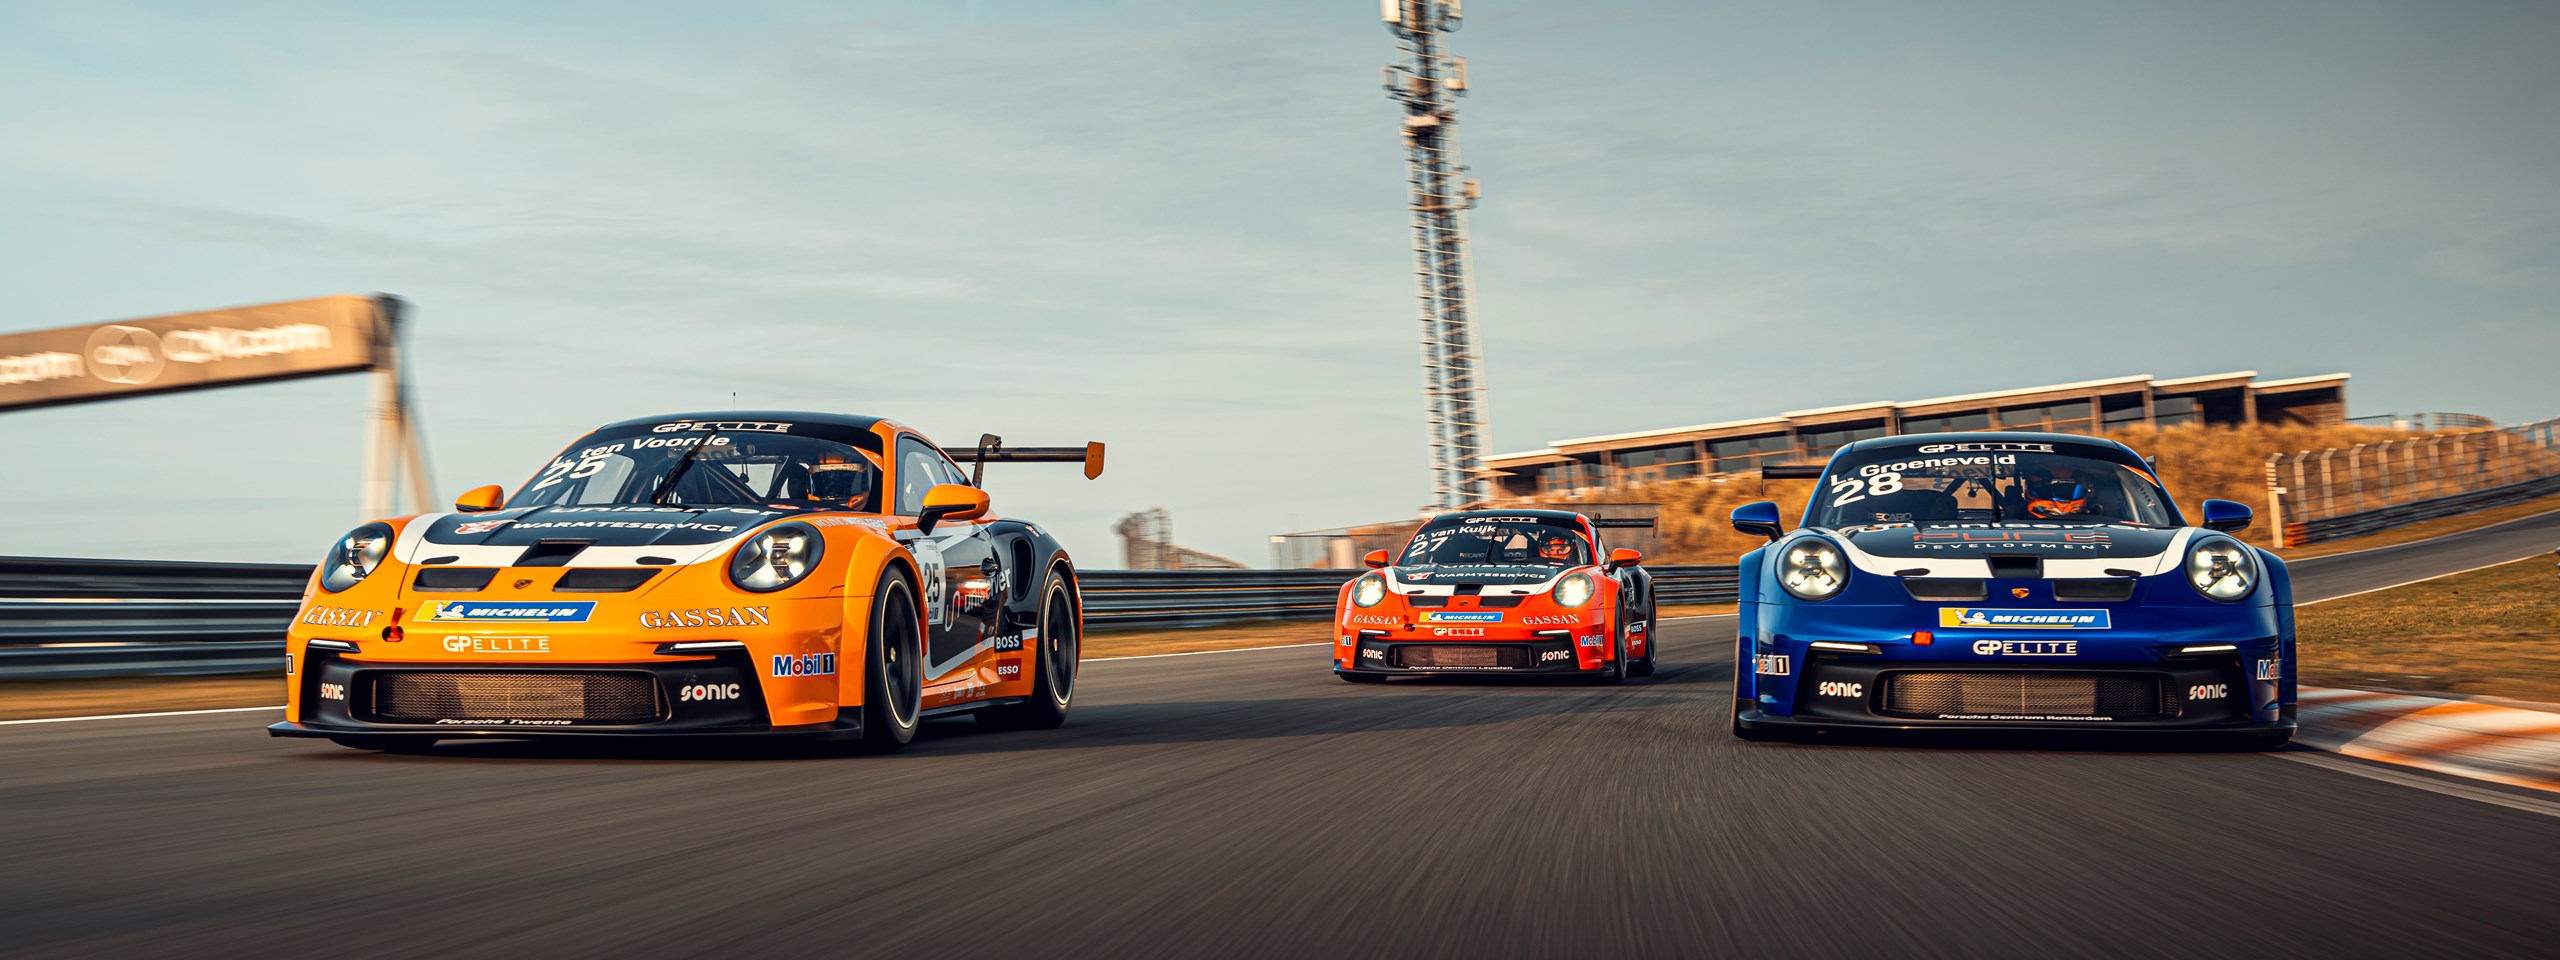 Team GP Elite, Porsche Mobil 1 Supercup 2022